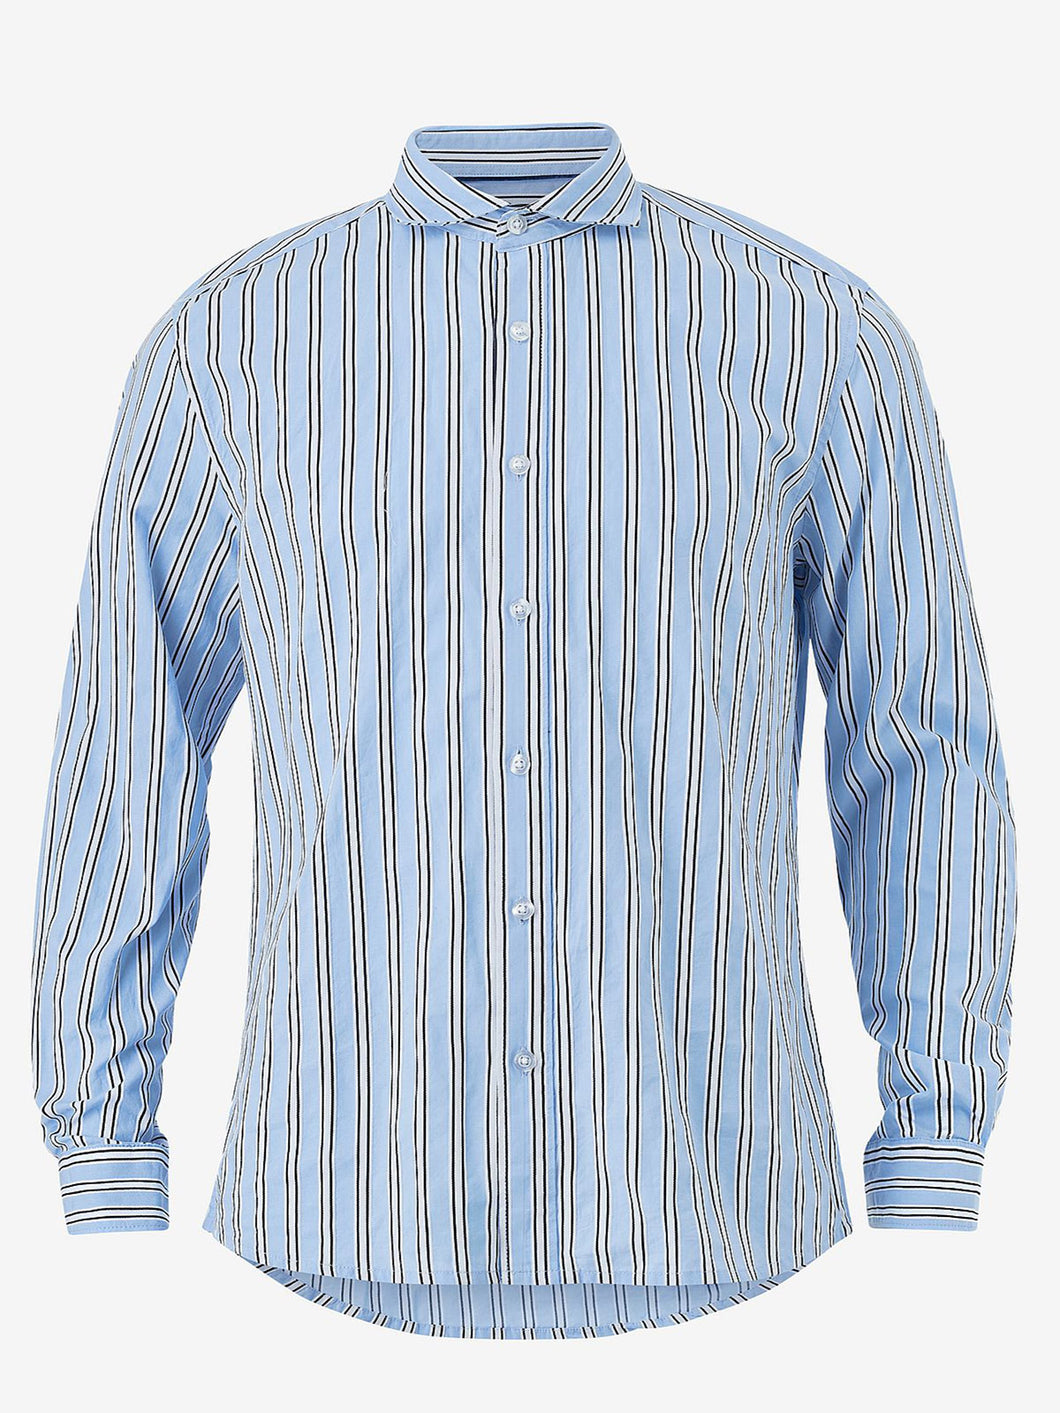 Mens Blue Big & Tall Pure Cotton Woven Striped Shirt